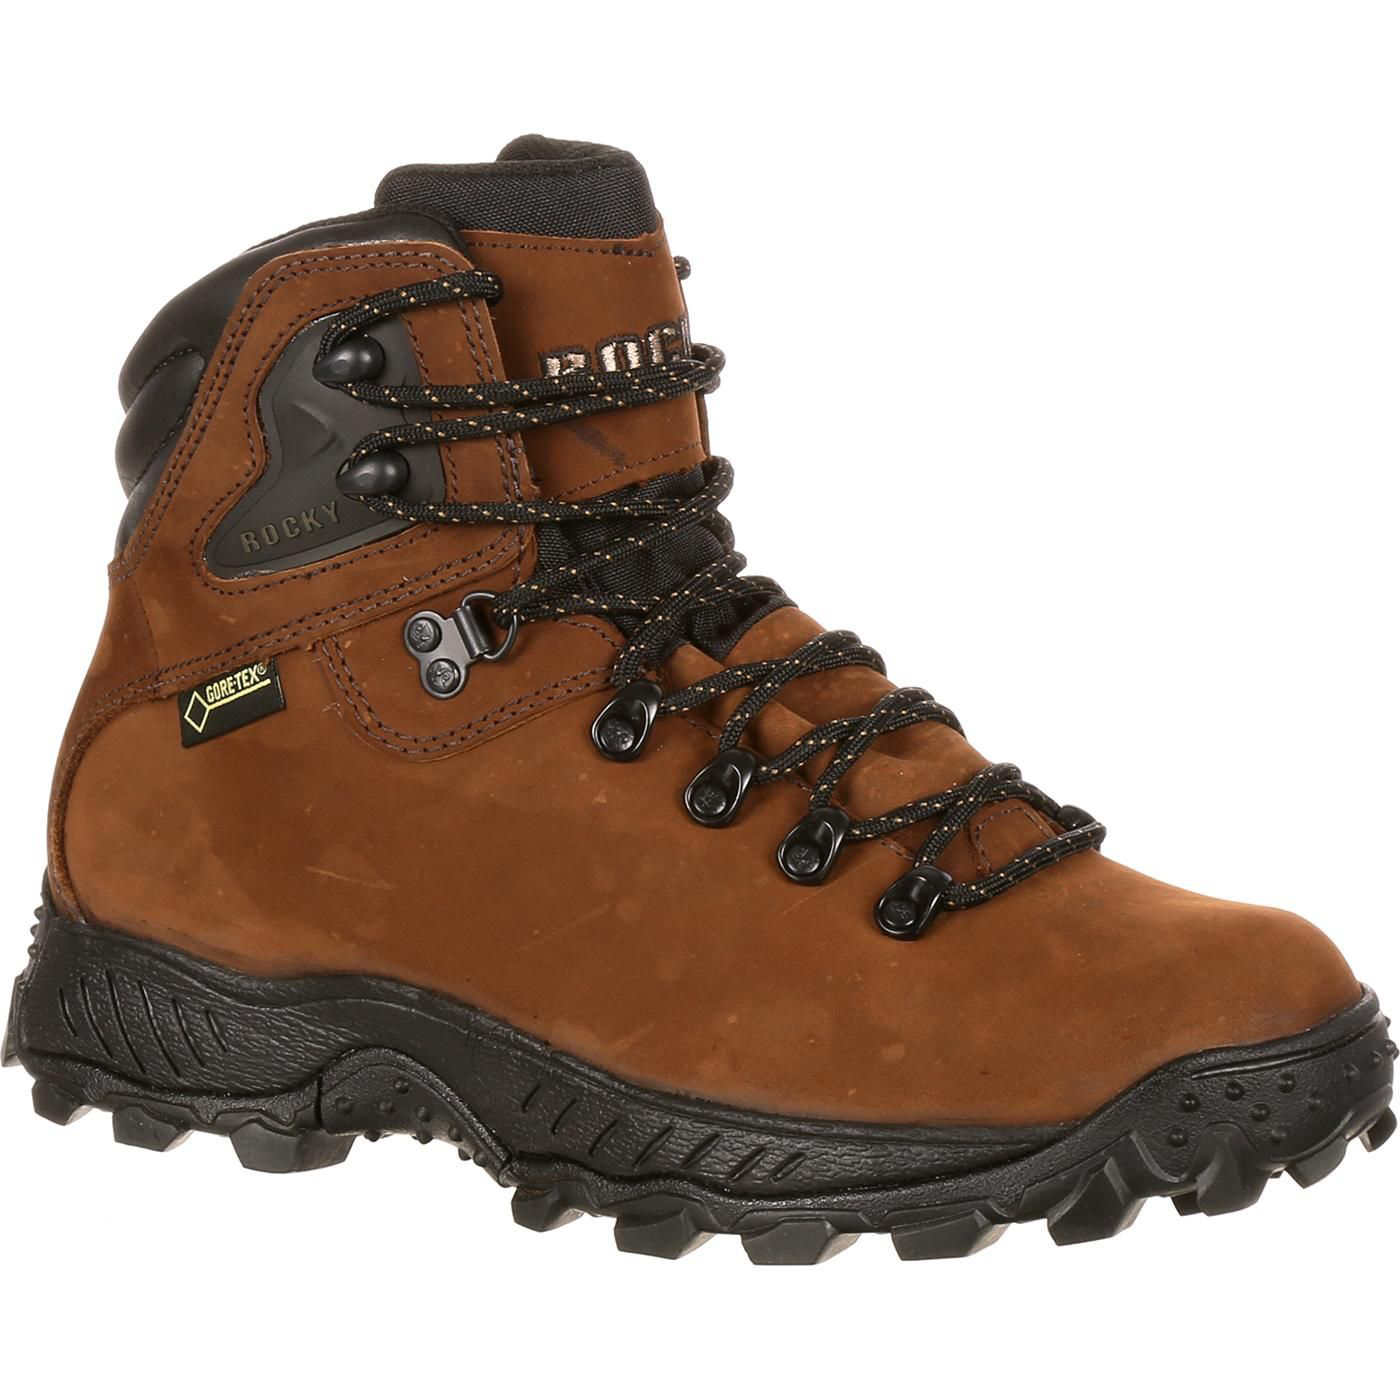 Rocky Ridgetop GORE-TEX 6"" Hiking Boots for Men - Brown - 9.5M